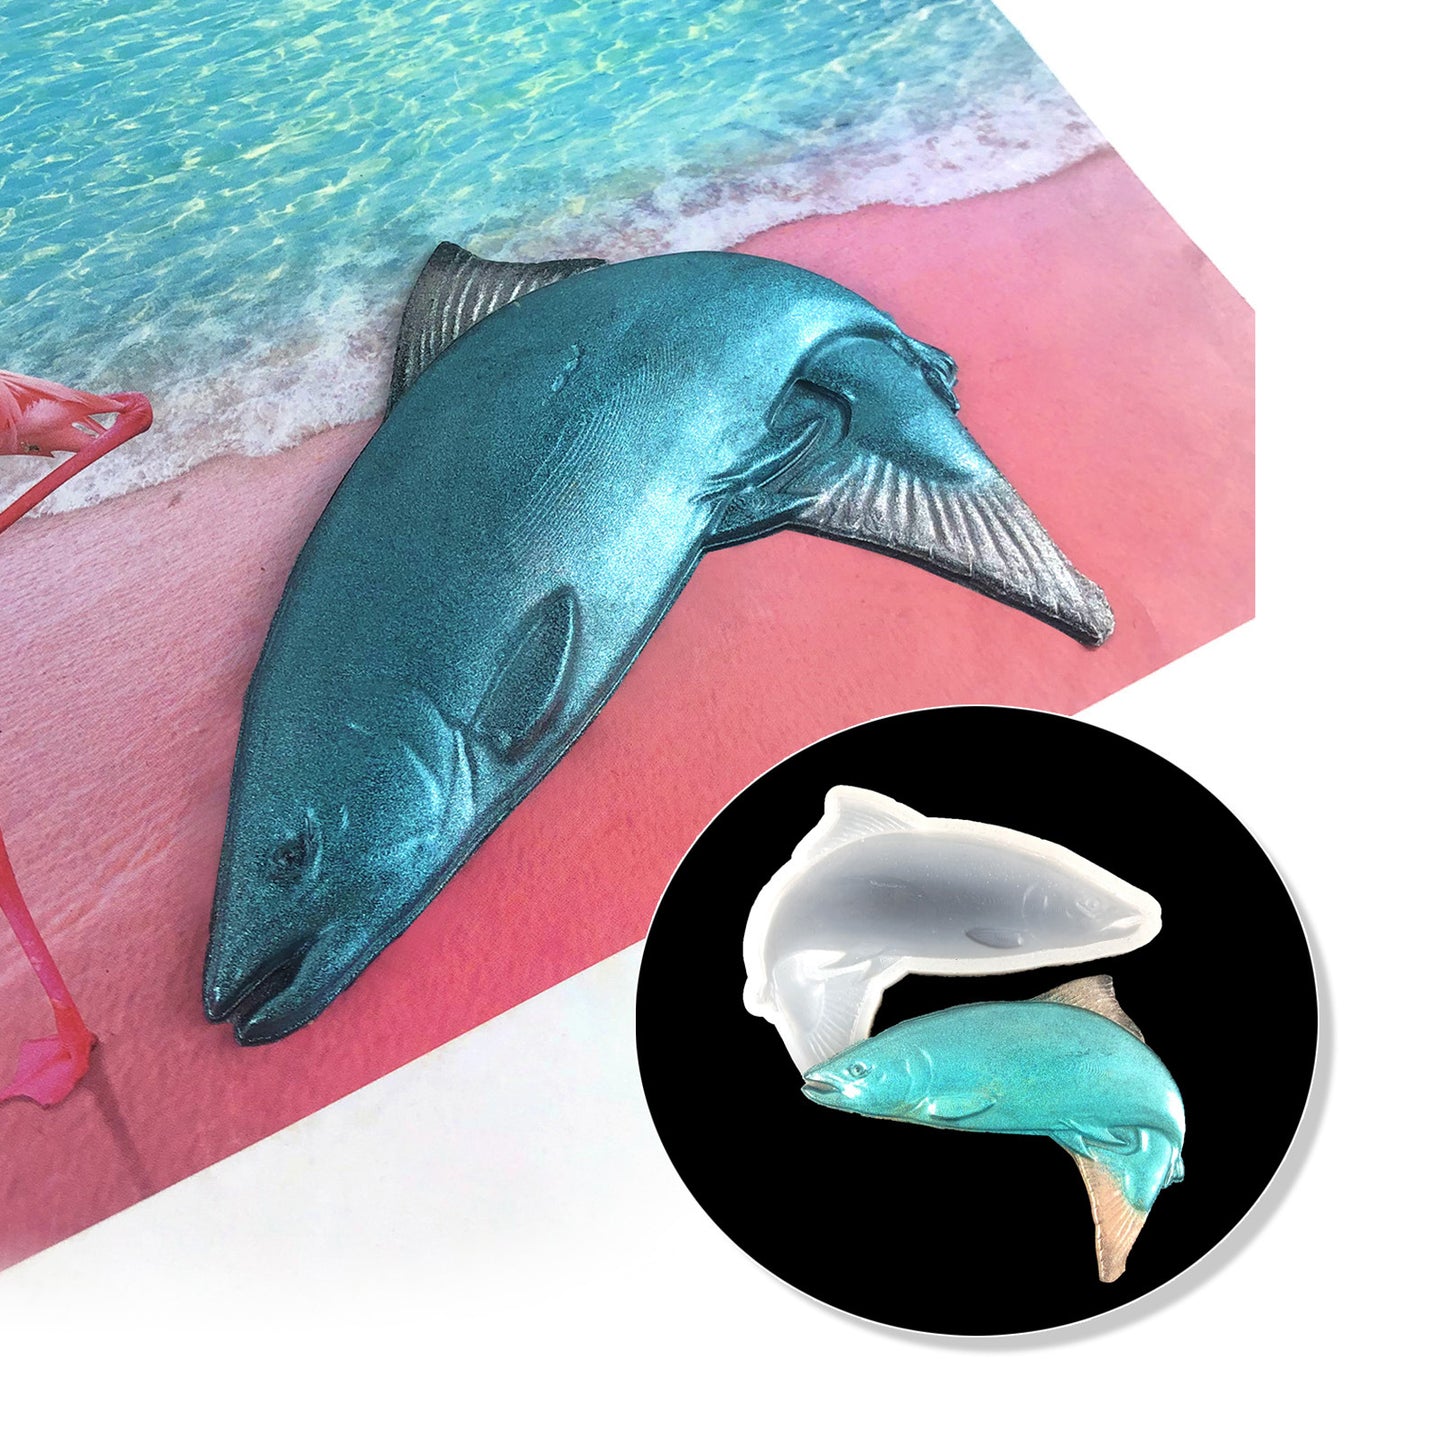 Shark Salmon Backpack Keychain Accessory Resin Mold